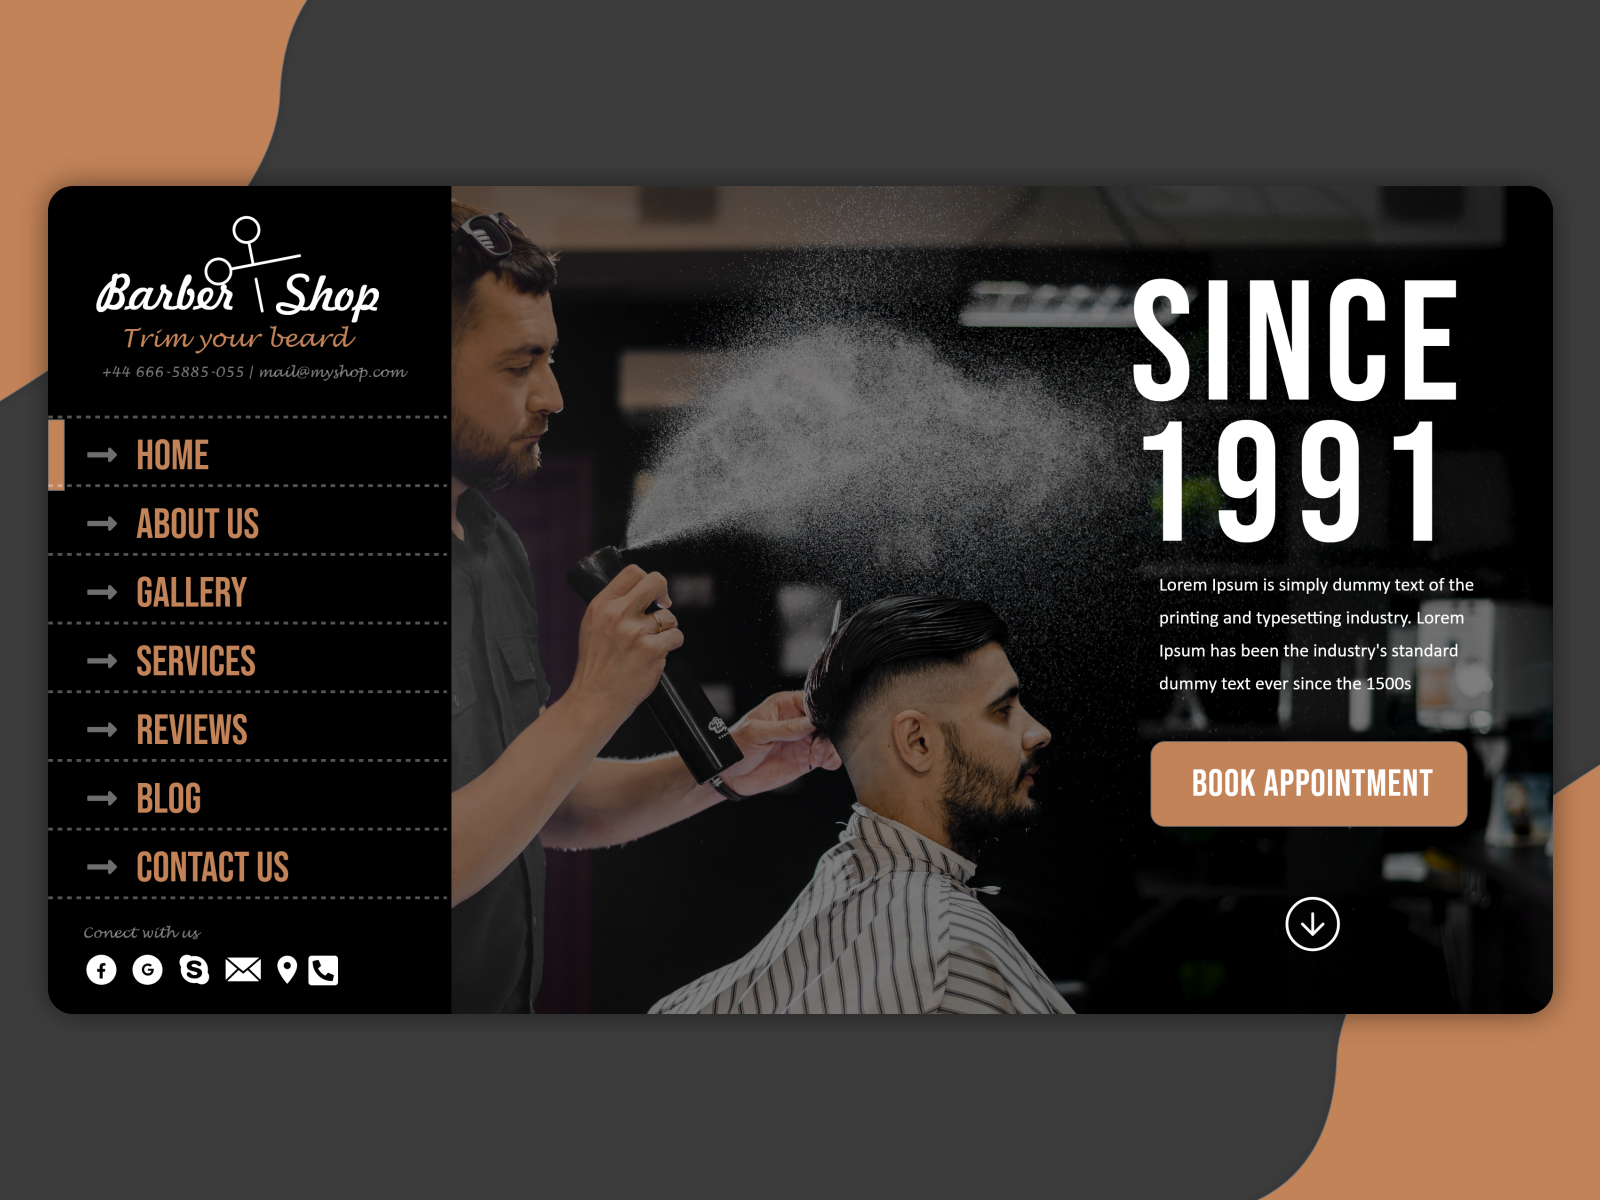 Barber shop website Design by Harish Kanzariya on Dribbble